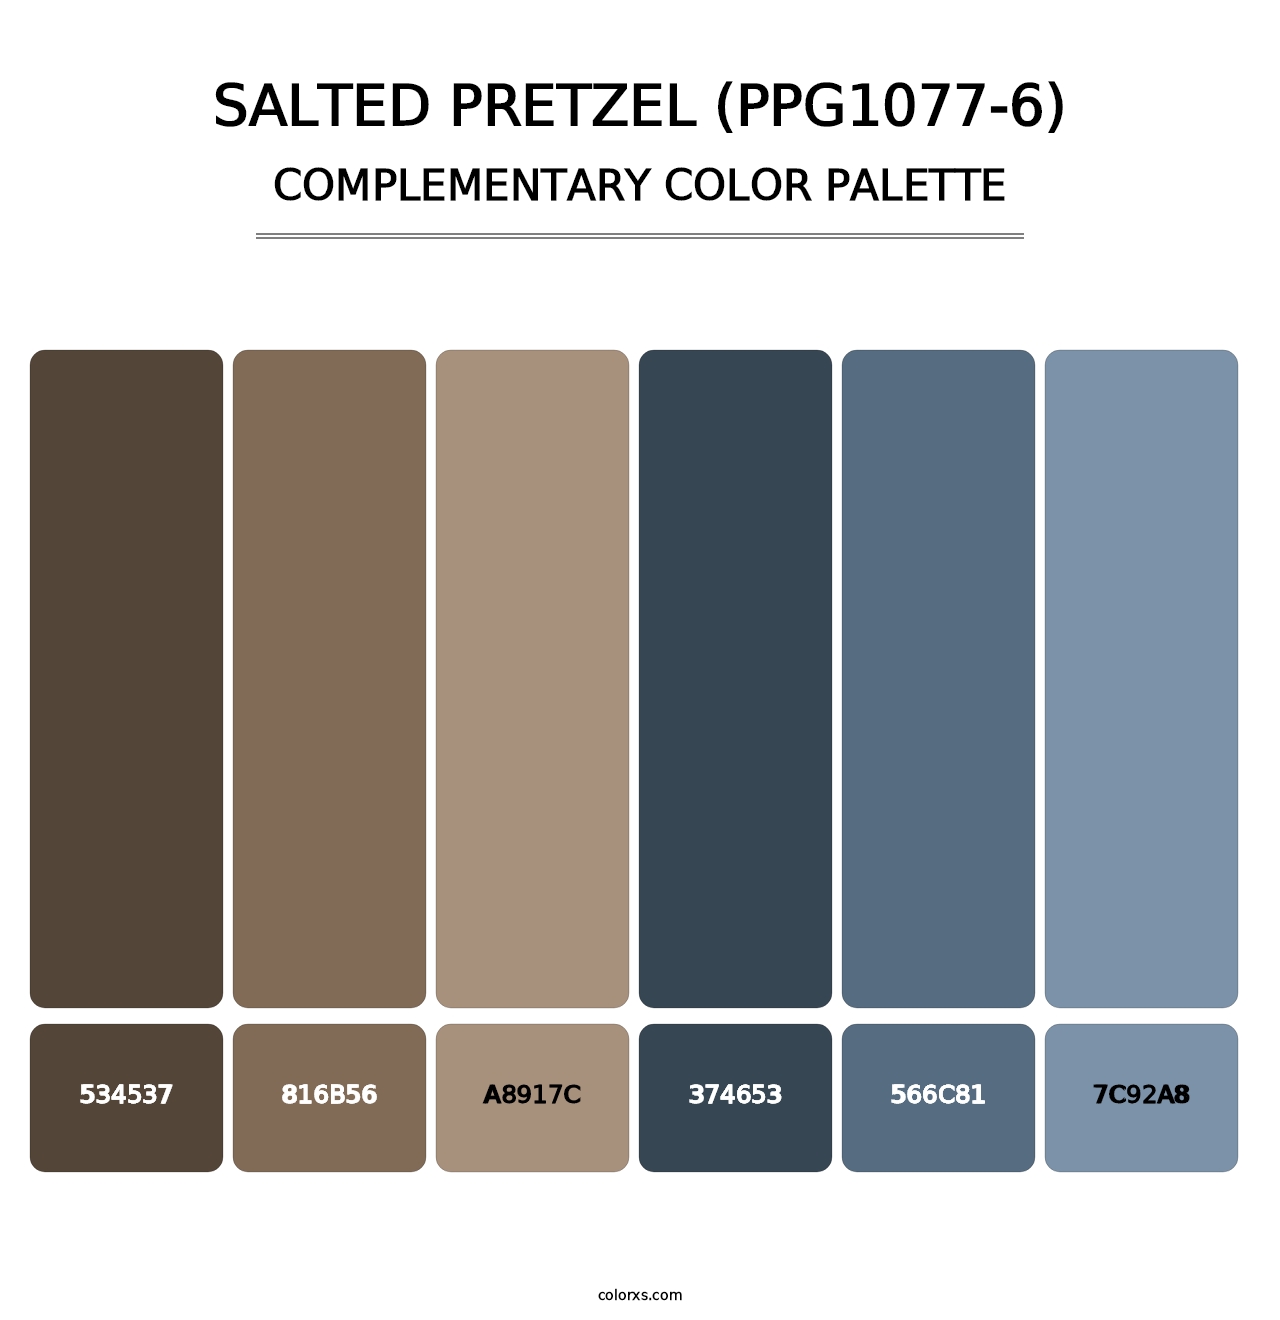 Salted Pretzel (PPG1077-6) - Complementary Color Palette